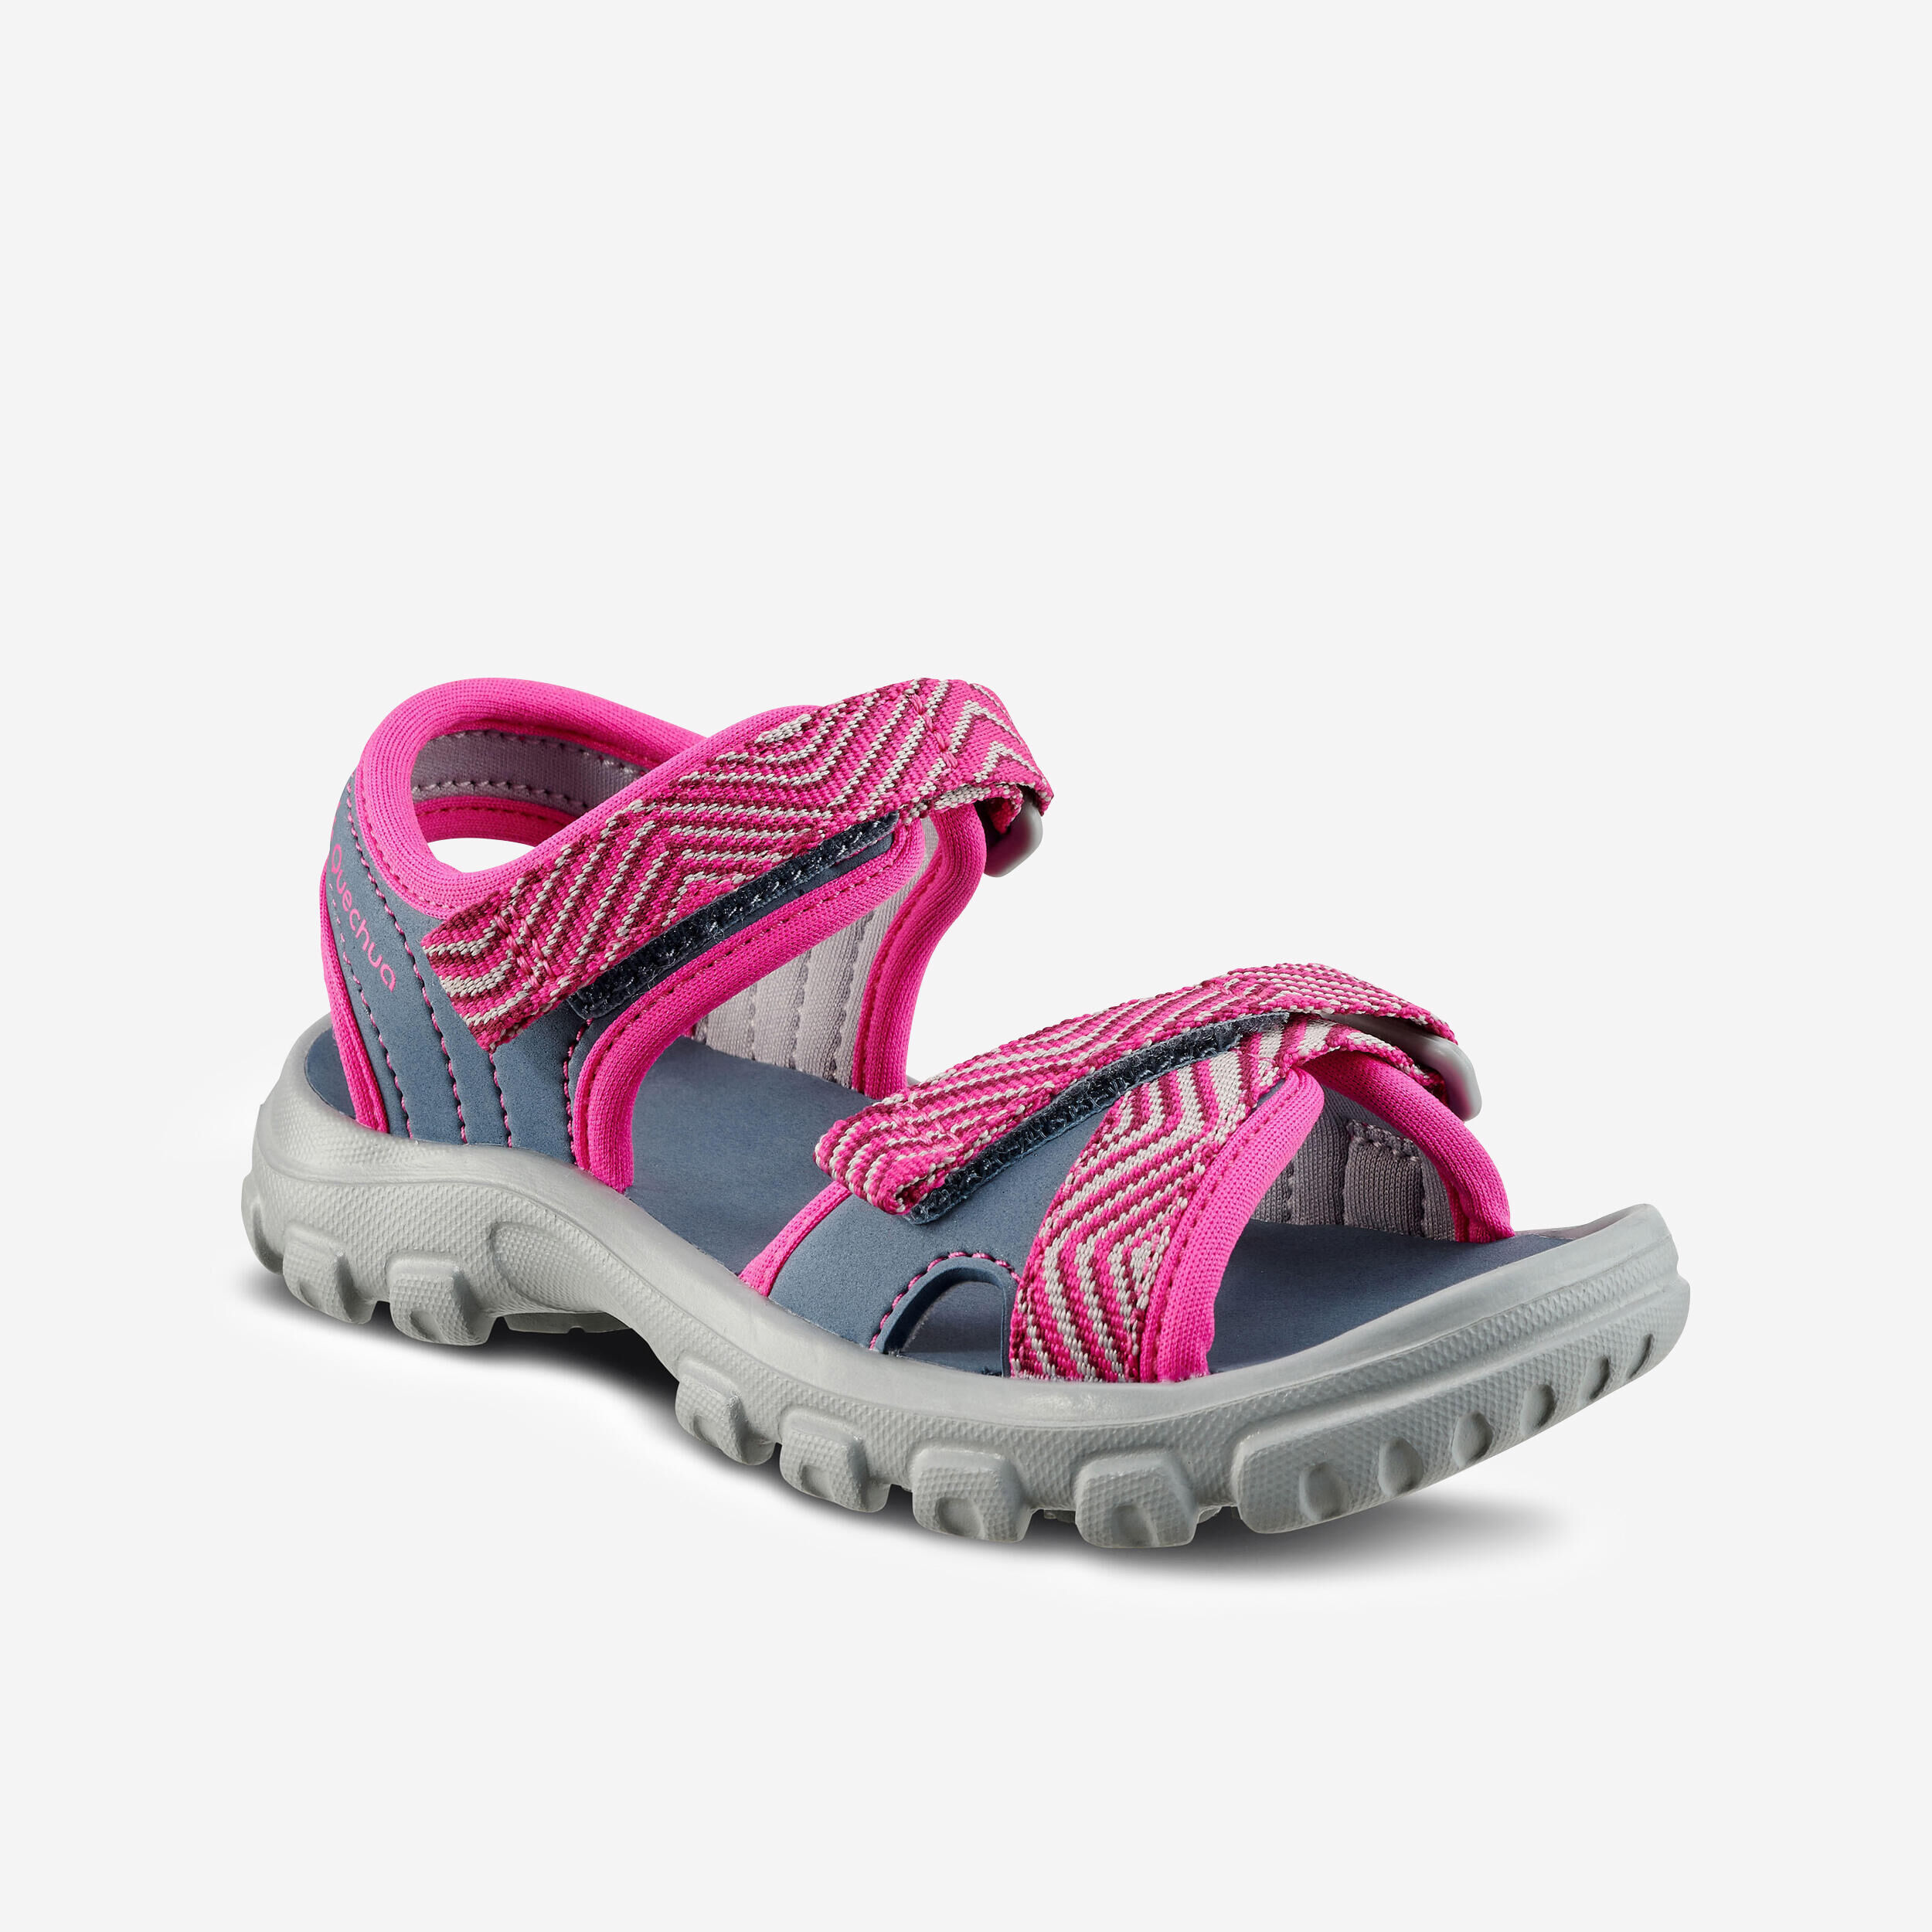 QUECHUA Hiking sandals MH100 KID blue pink - children - Jr size 7 TO 12.5